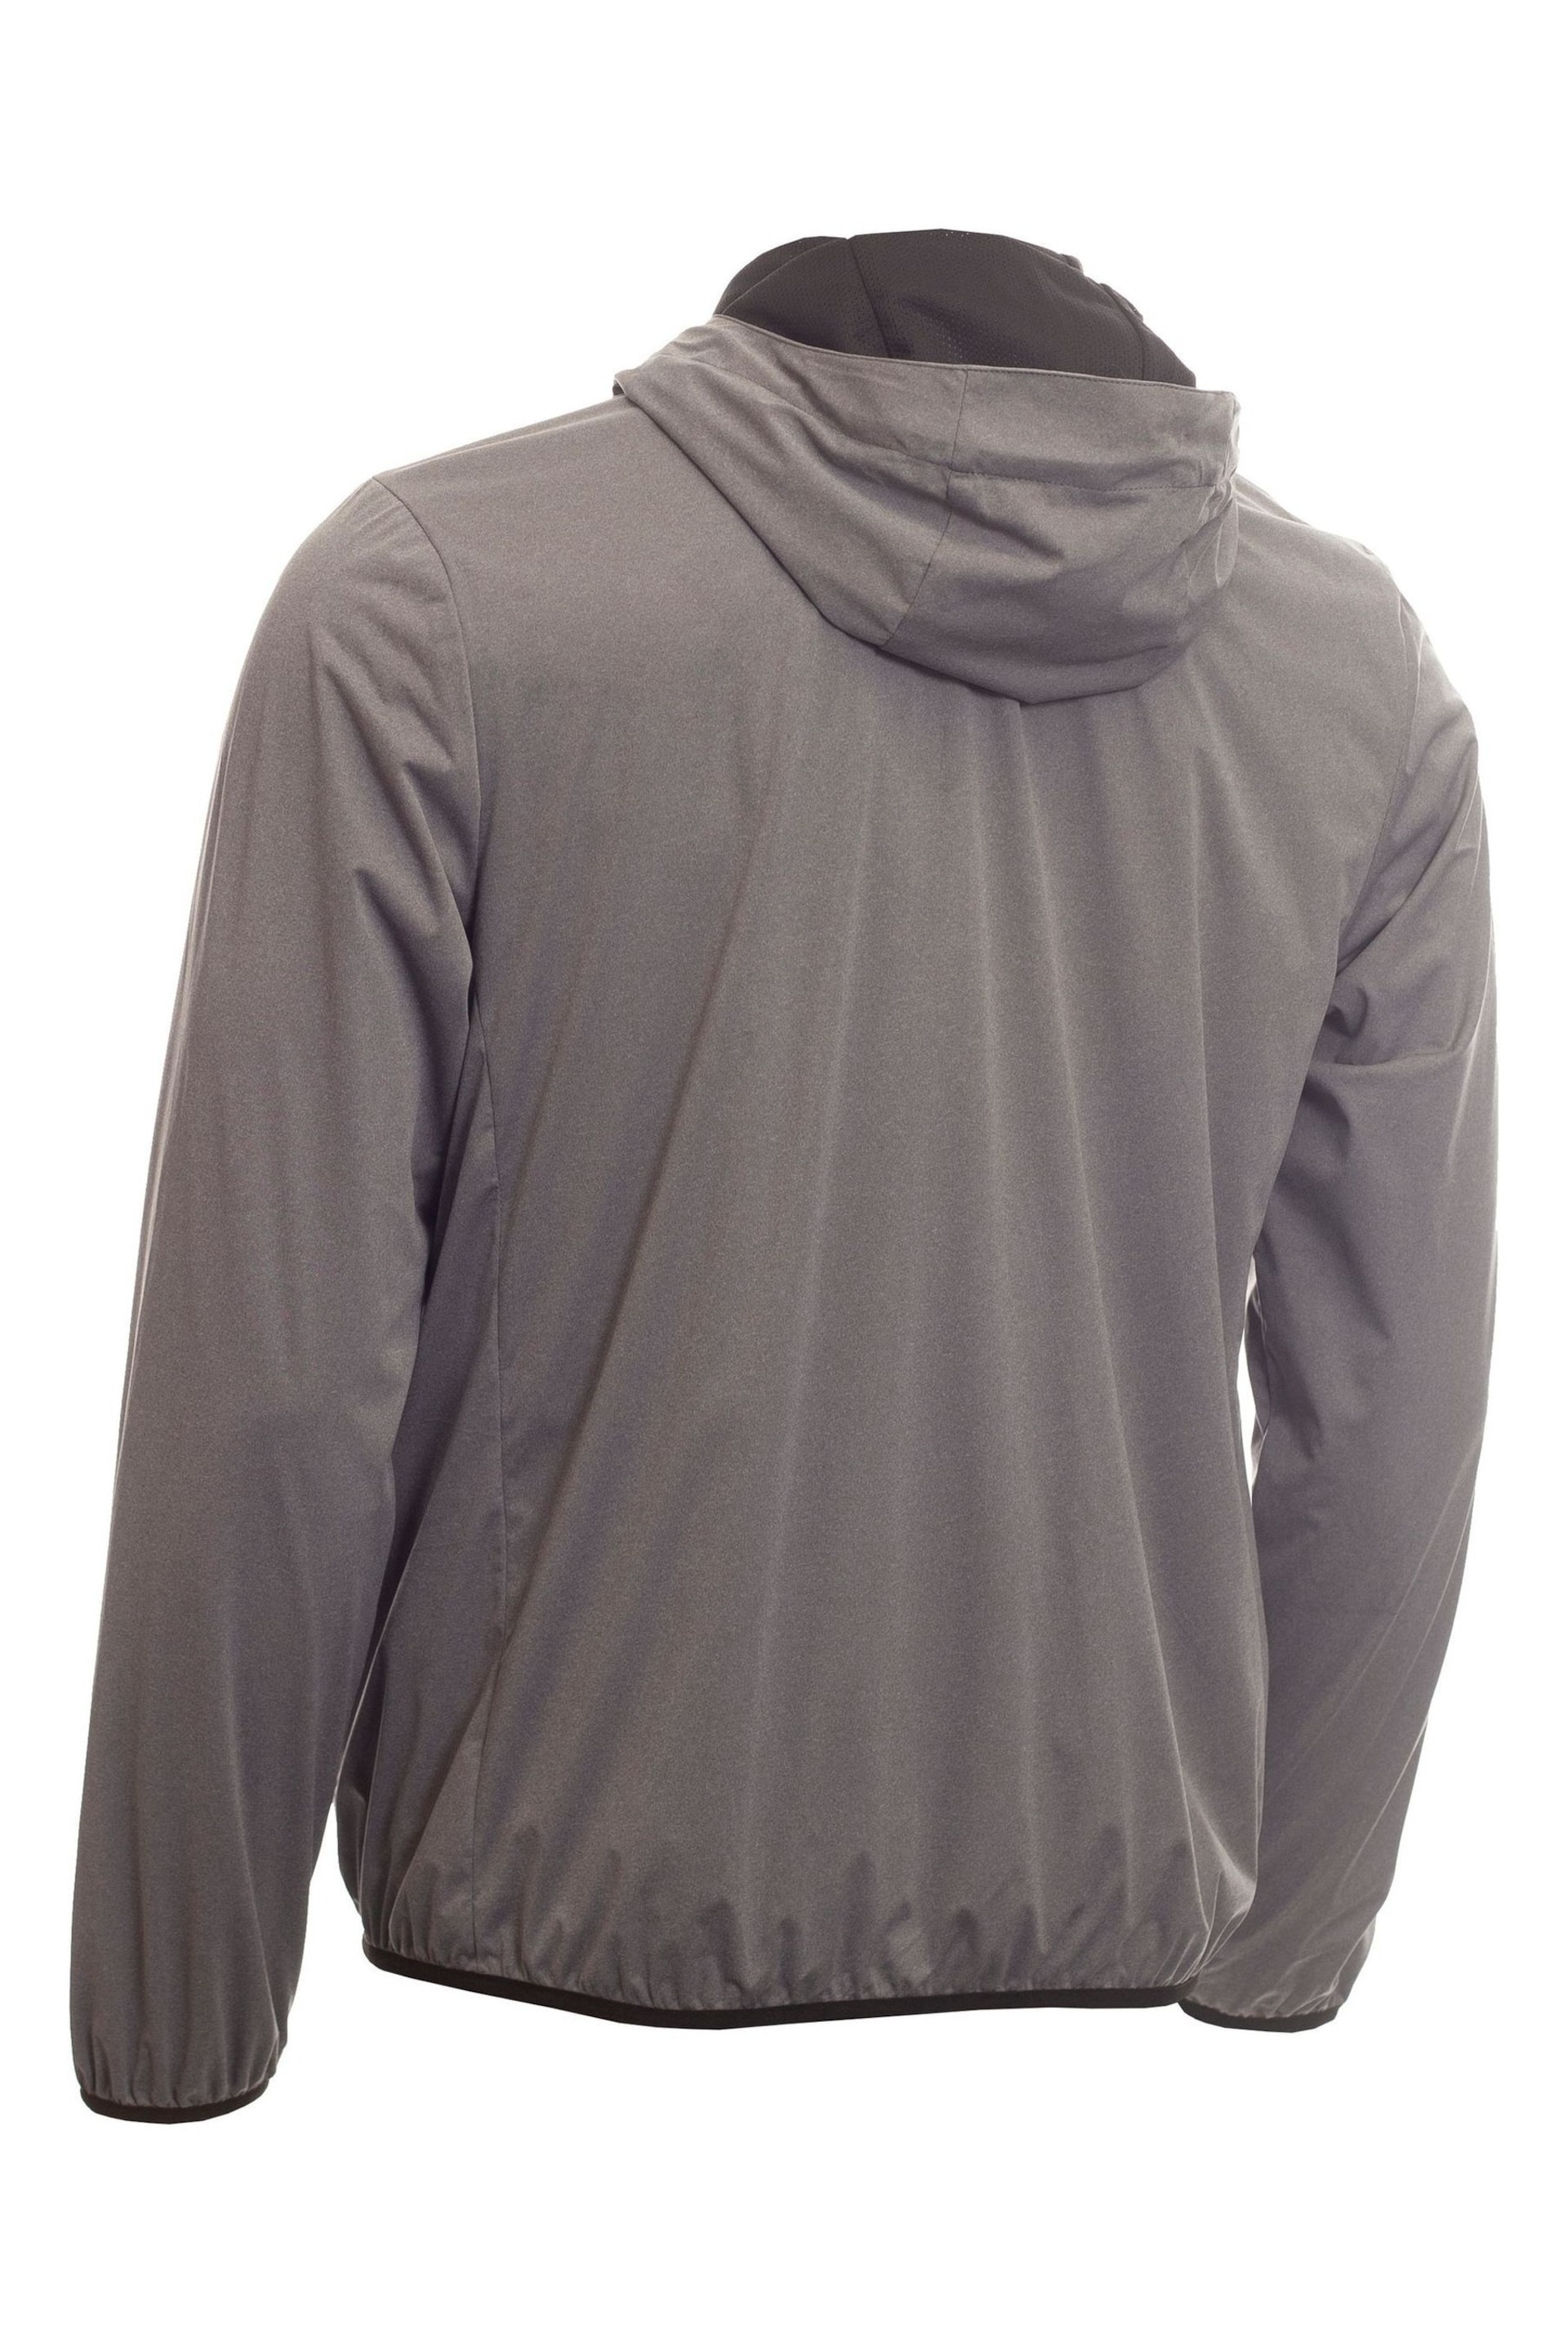 Calvin Klein Golf Grey Waterproof Ultron Hooded Jacket - Image 6 of 8